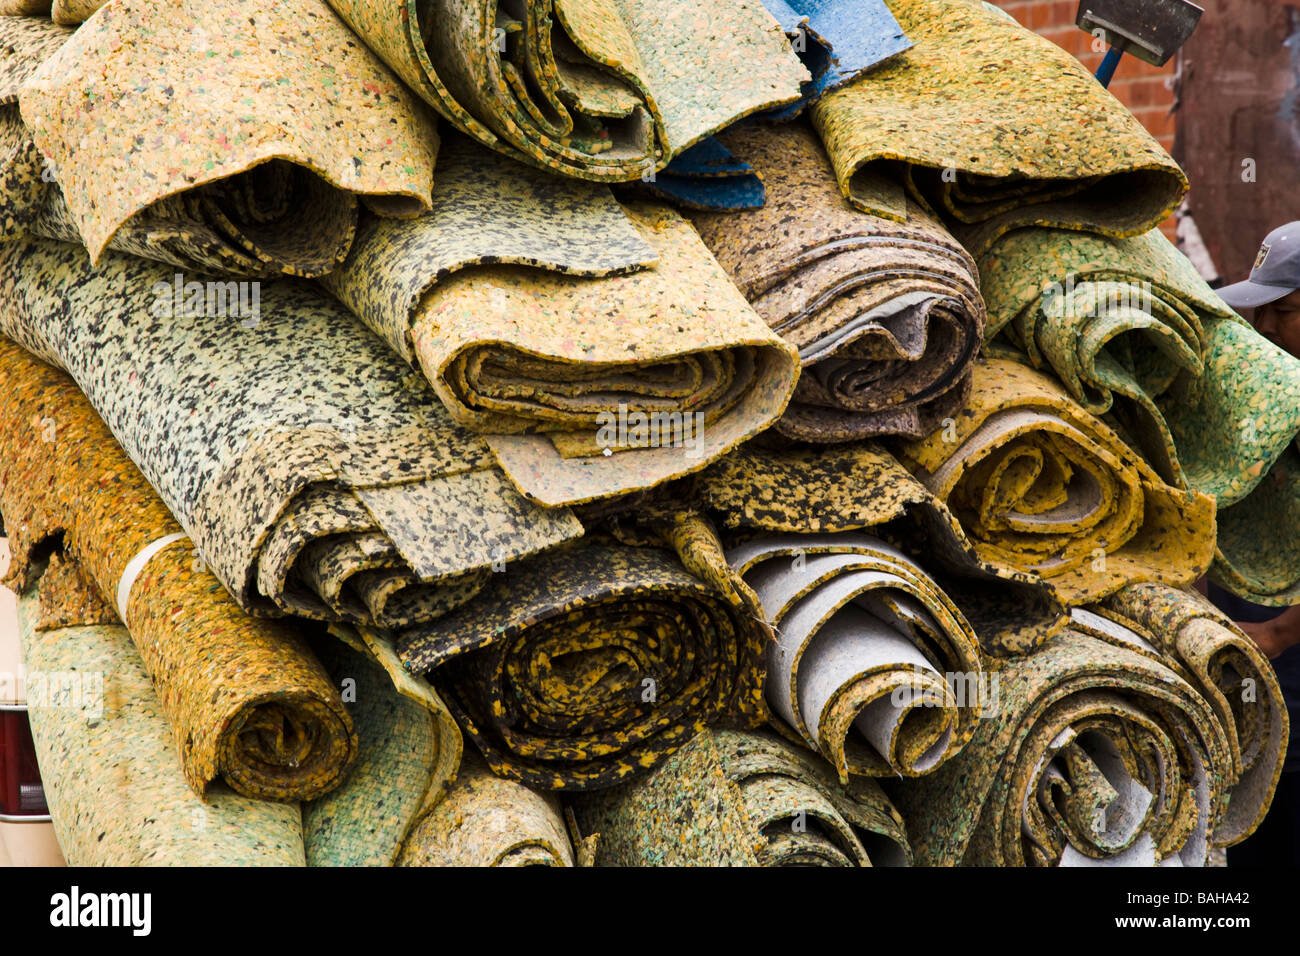 Carpet Padding - Stockton Recycles